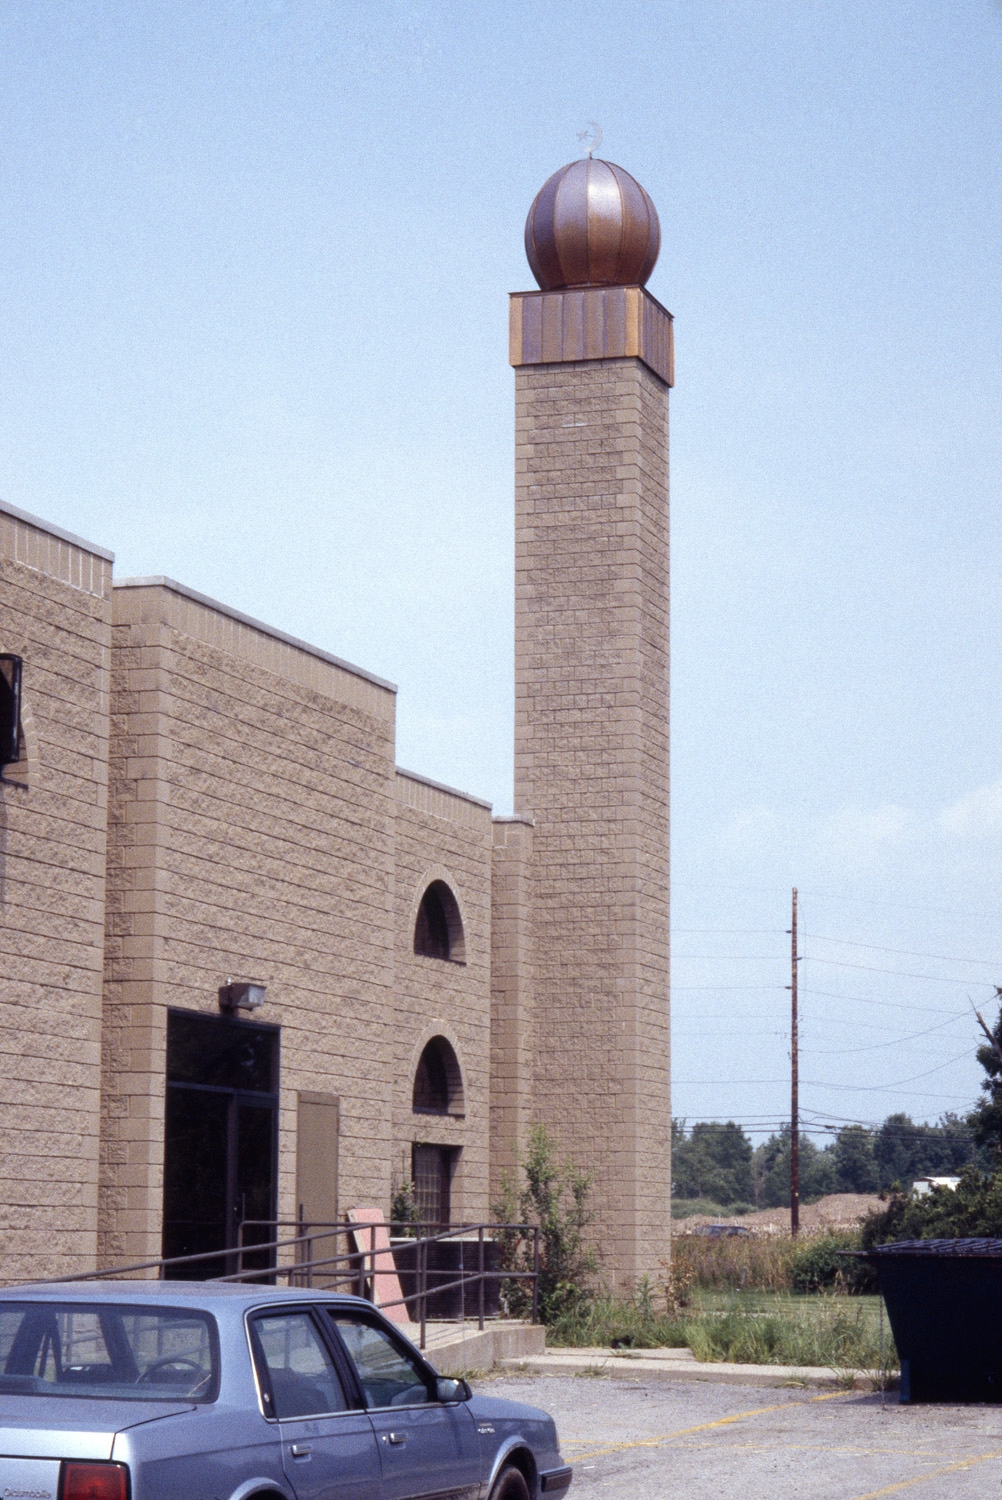 View with minaret on northeast corner of building